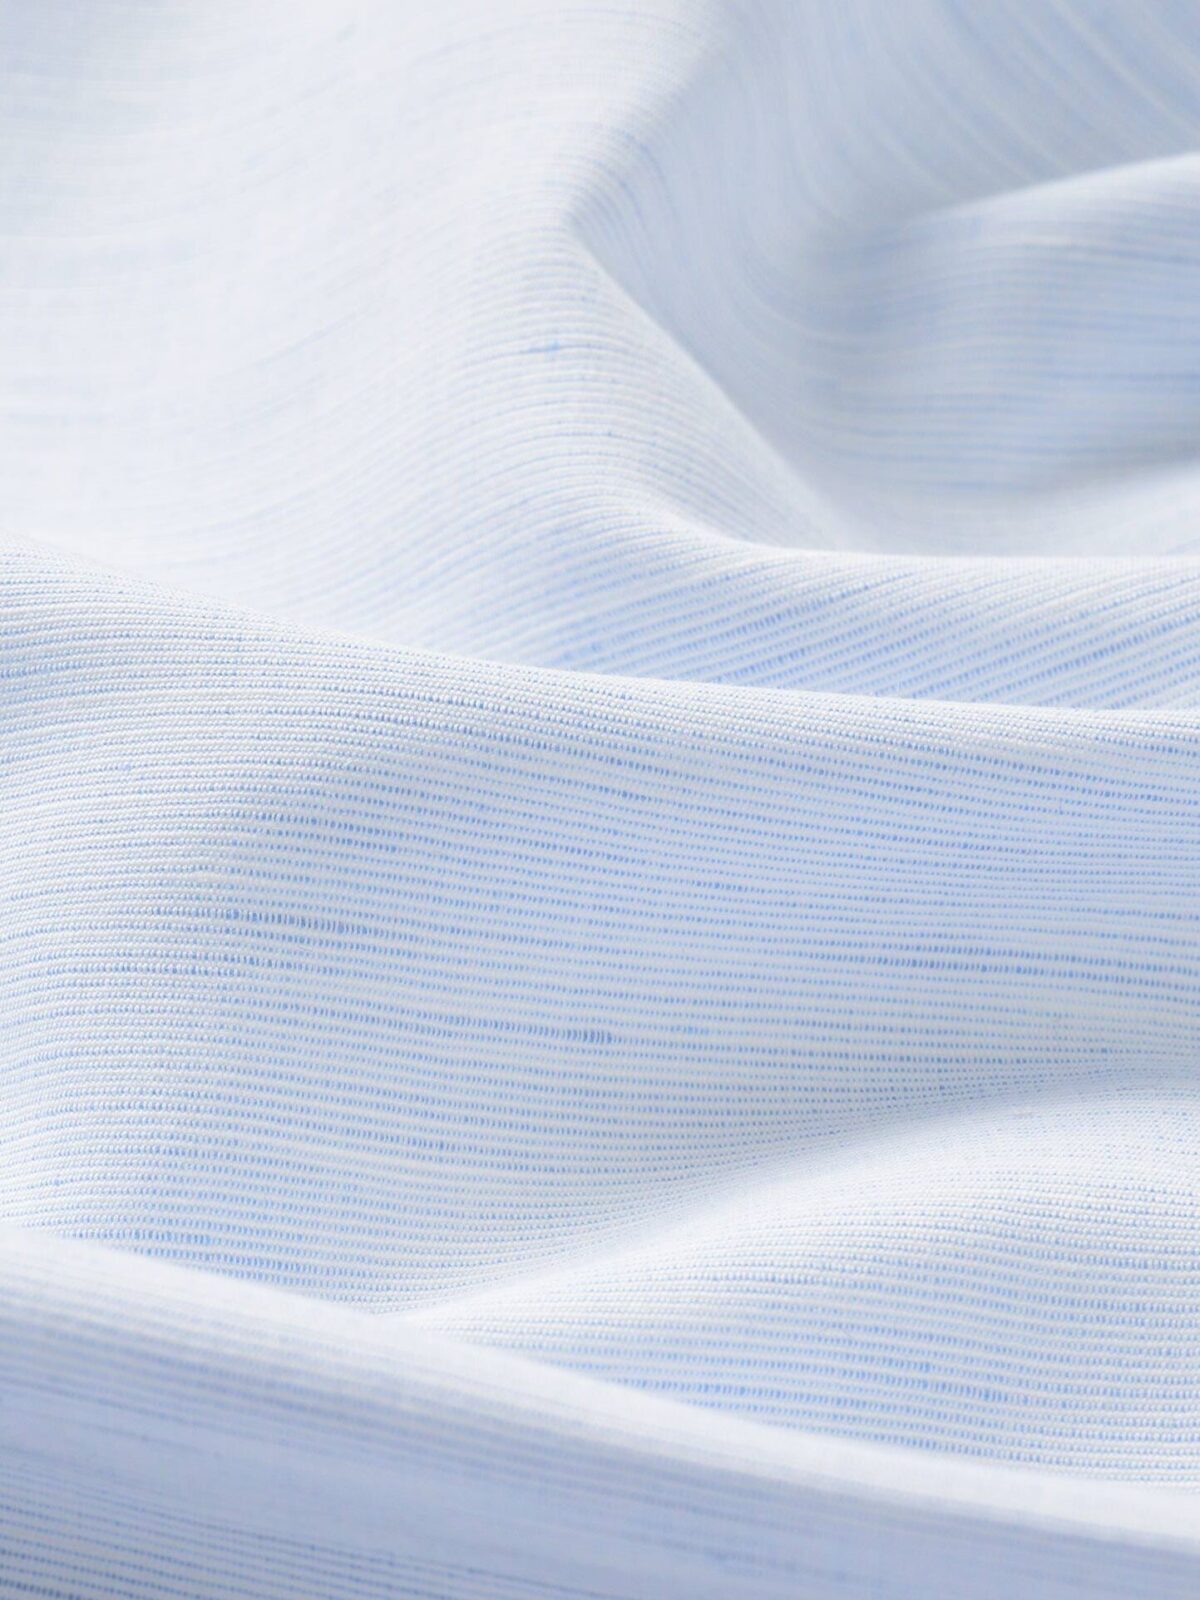 Light Blue 120s Cotton and Linen Plain Weave Shirts by Proper Cloth